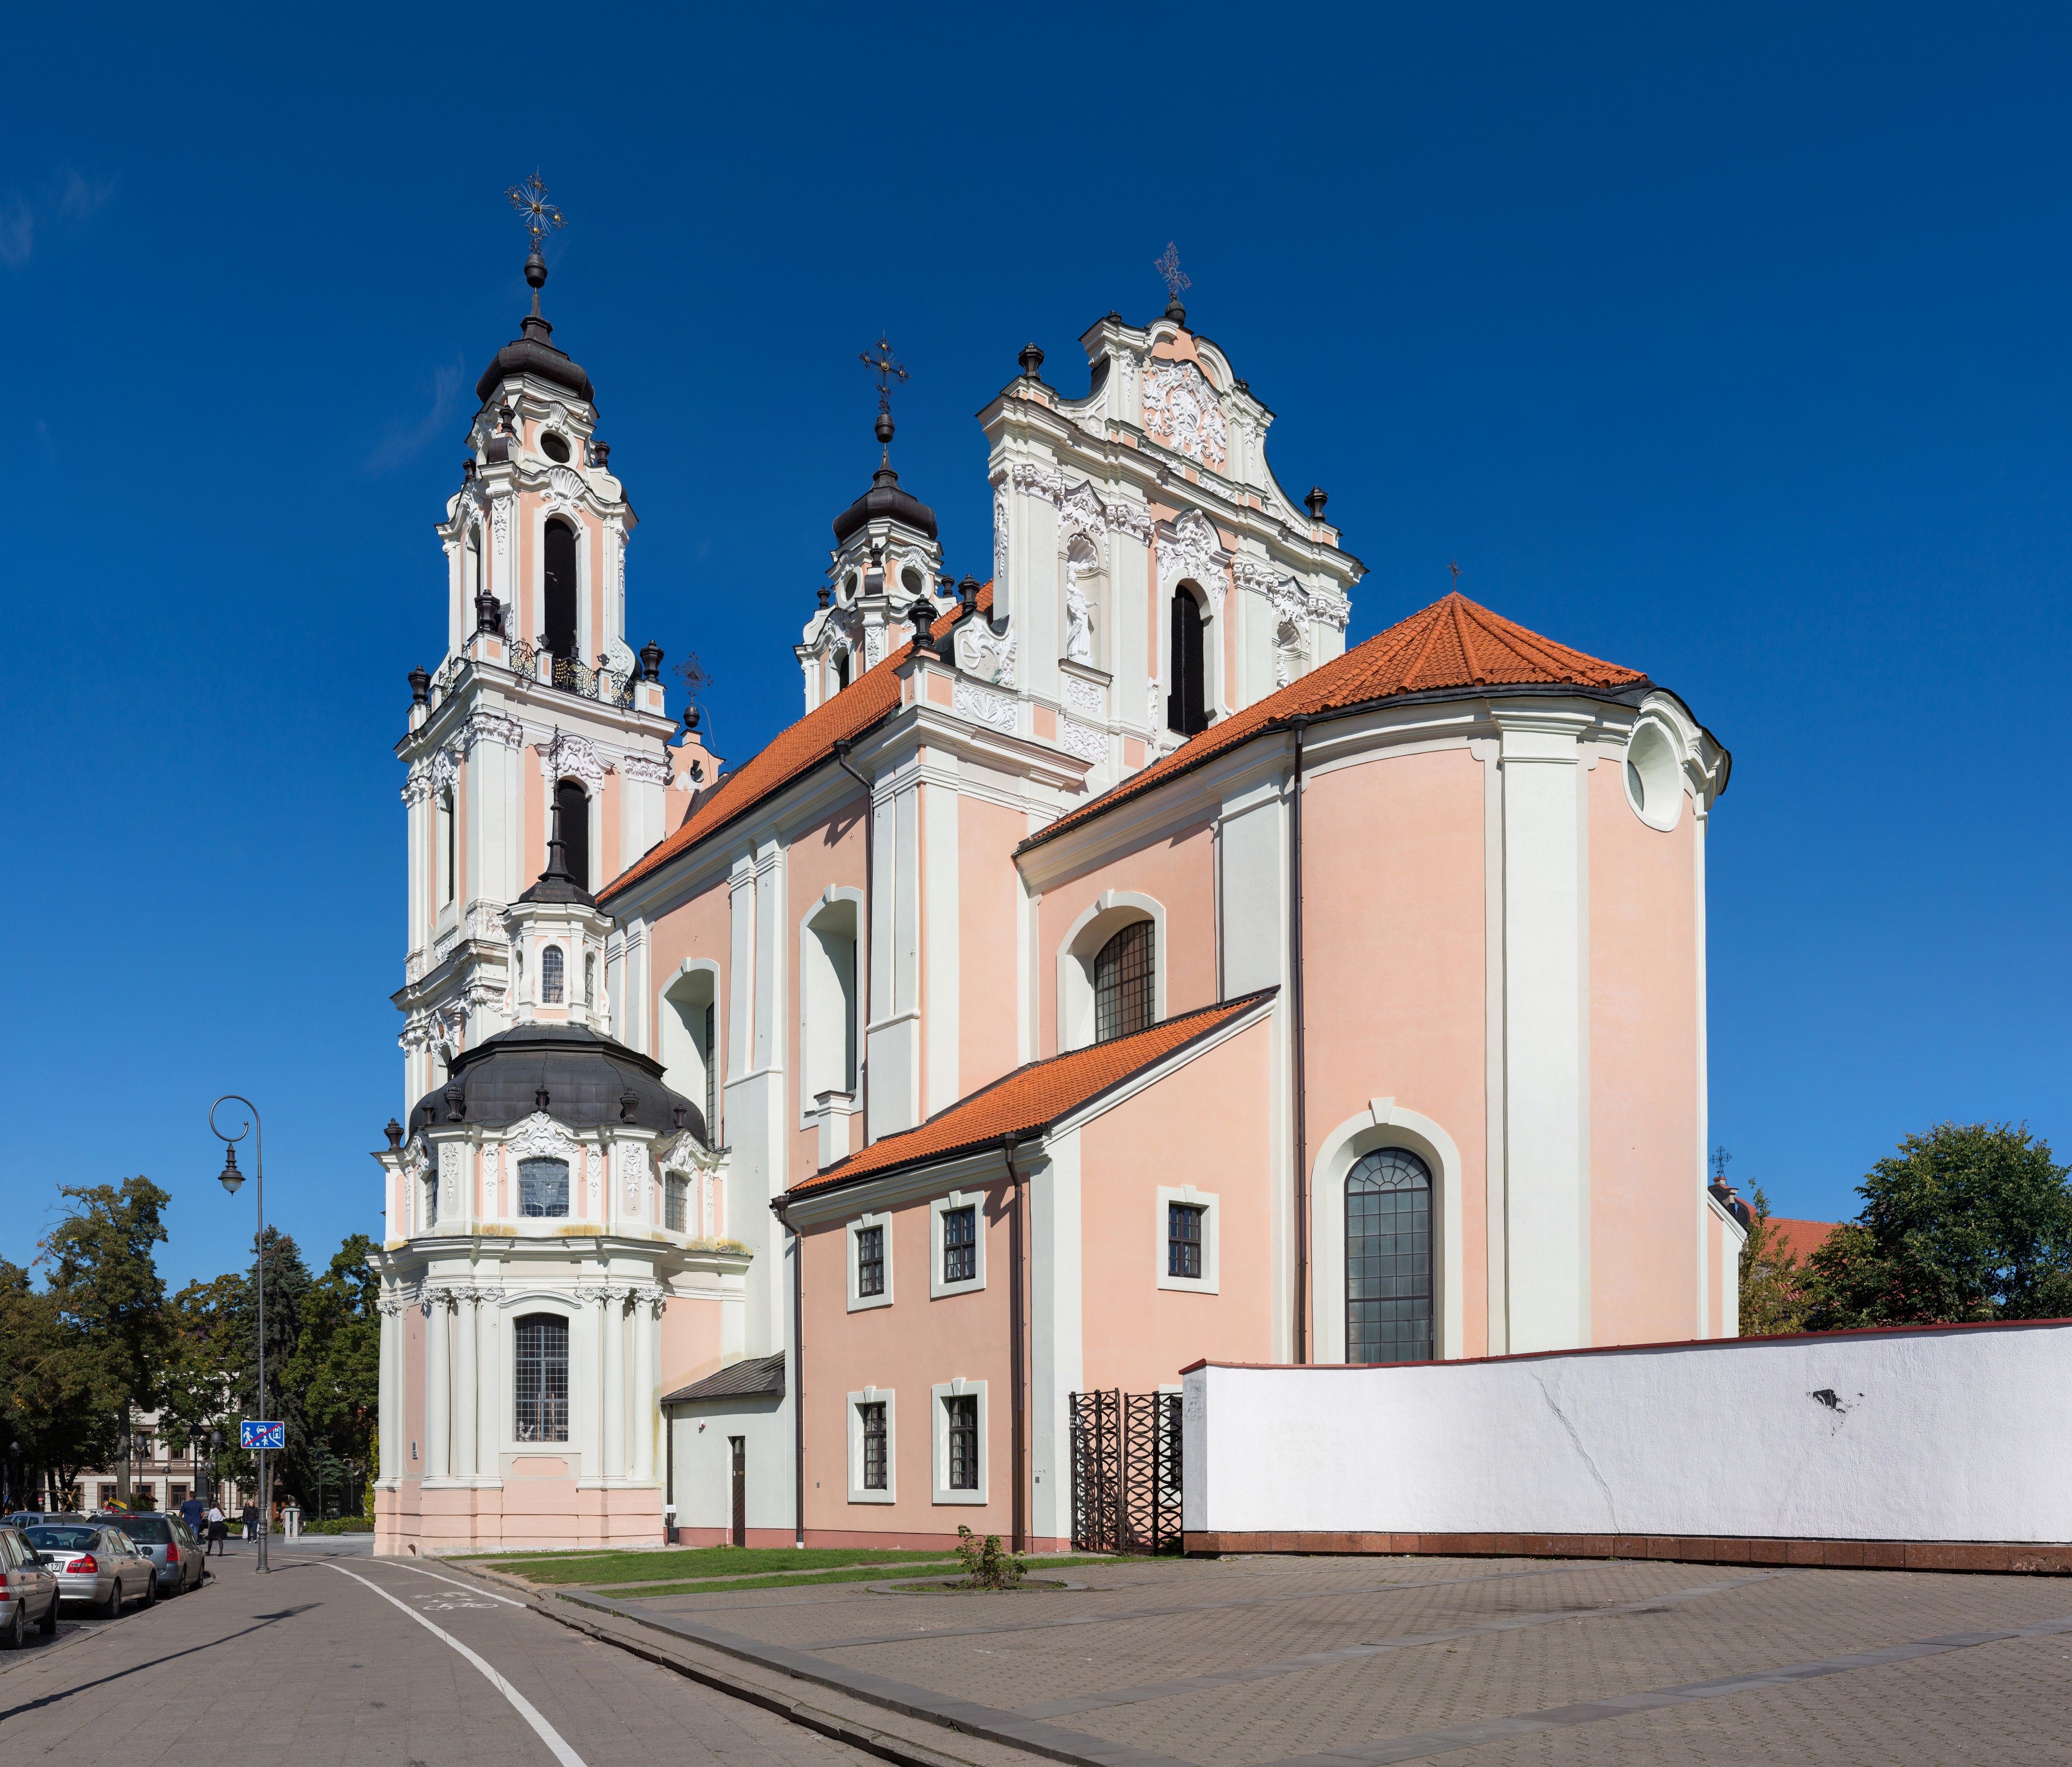 St Catherine's Church, Vilnius, Lithuania - Diliff